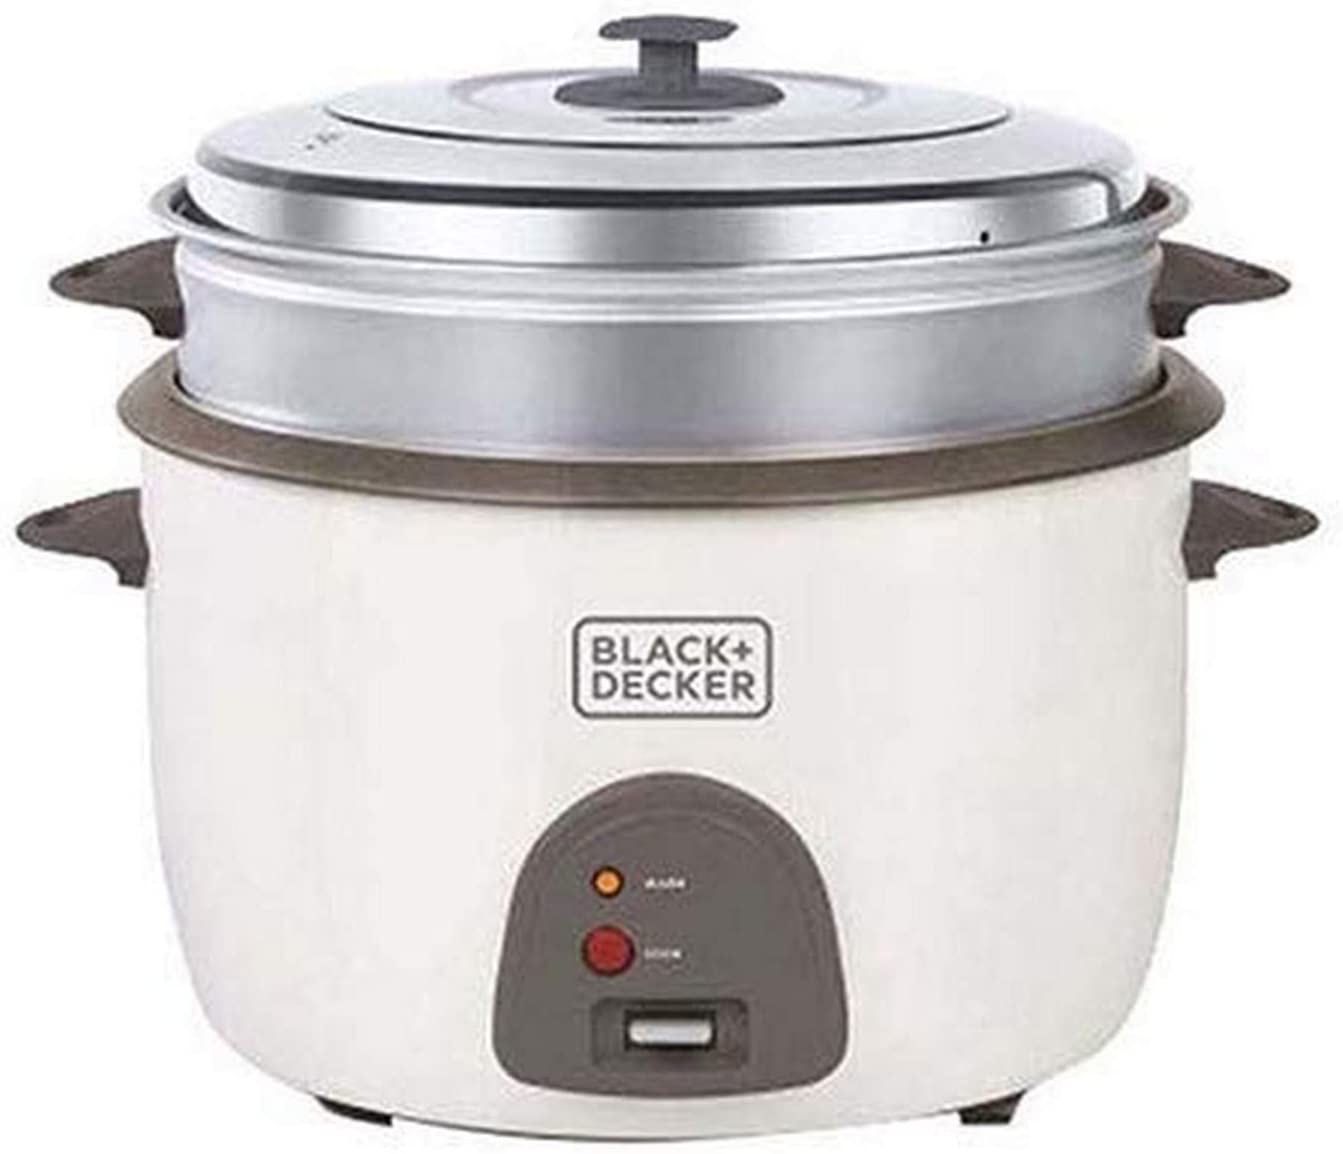 Black & Decker RC1050 350W 1 L 4.2 Cup Rice Cooker 220-240 Volts